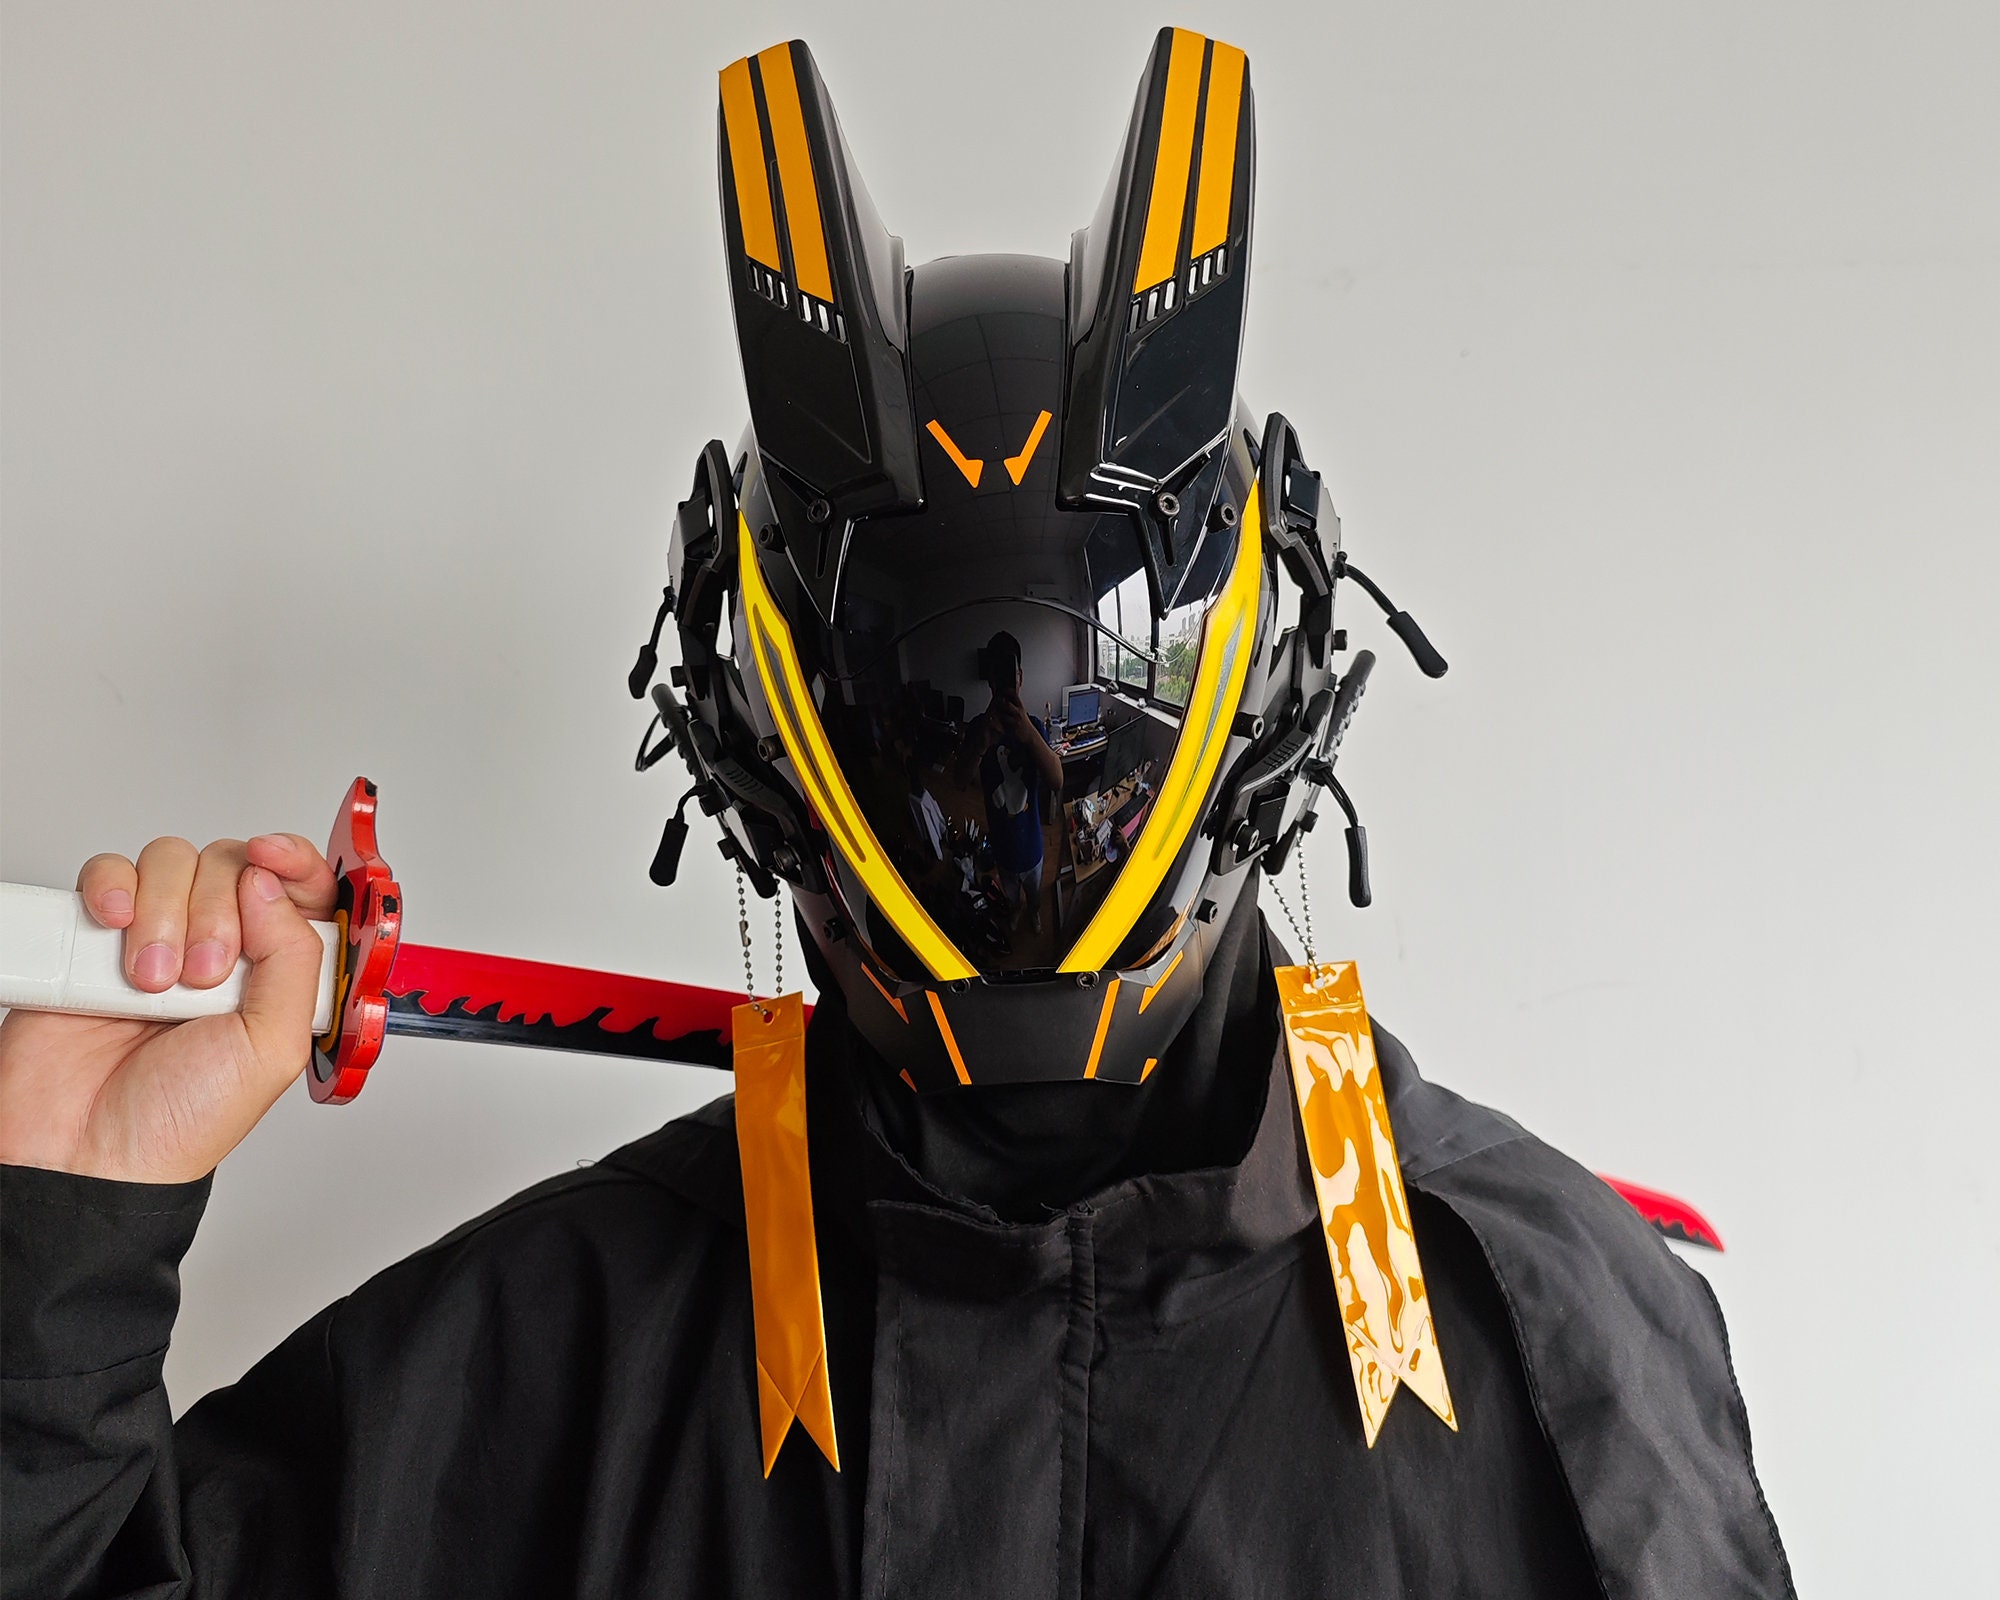 Cyber punk Mask Helmet with Braids Light up Techwear Punk Mask Cosplay  Samurai Mask Costume for Men Women Halloween Party Gifts